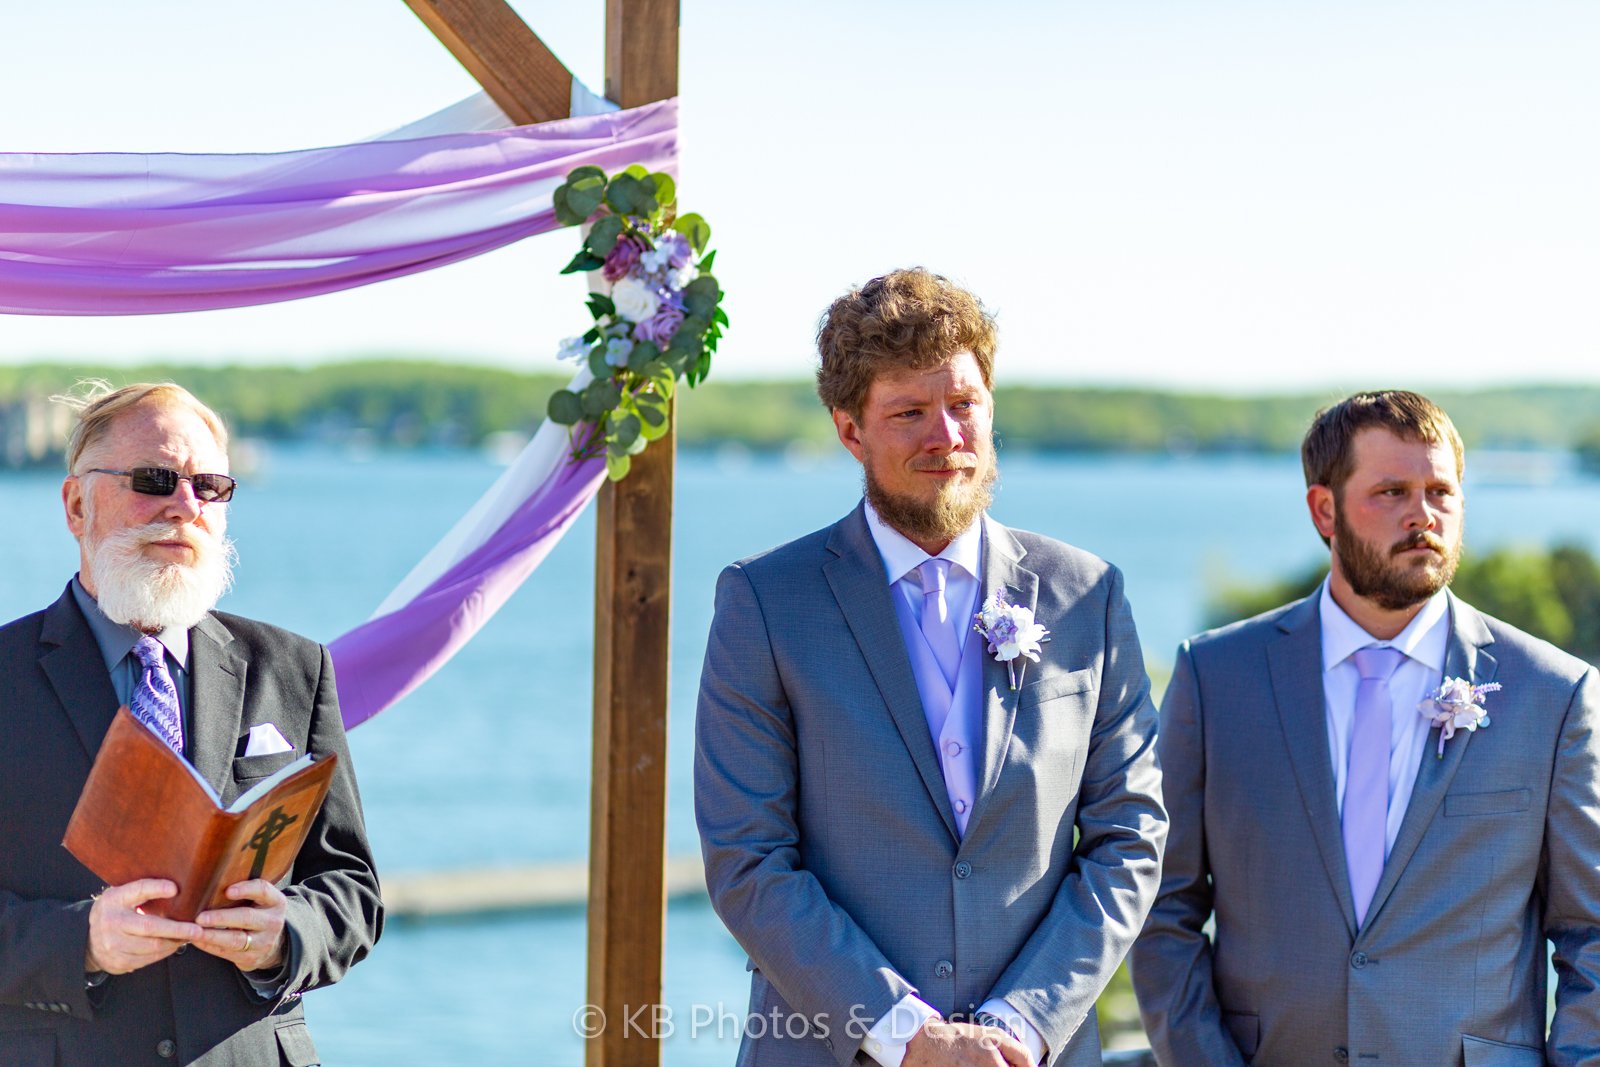 Wedding-Lanna-Brad-Lodge-of-Four-Seasons-St-Louis-STL-Lake-of-the-Ozarks-Missouri-wedding-photographer-KB-Photos-and-Design-bride-groom-photos-415.jpg